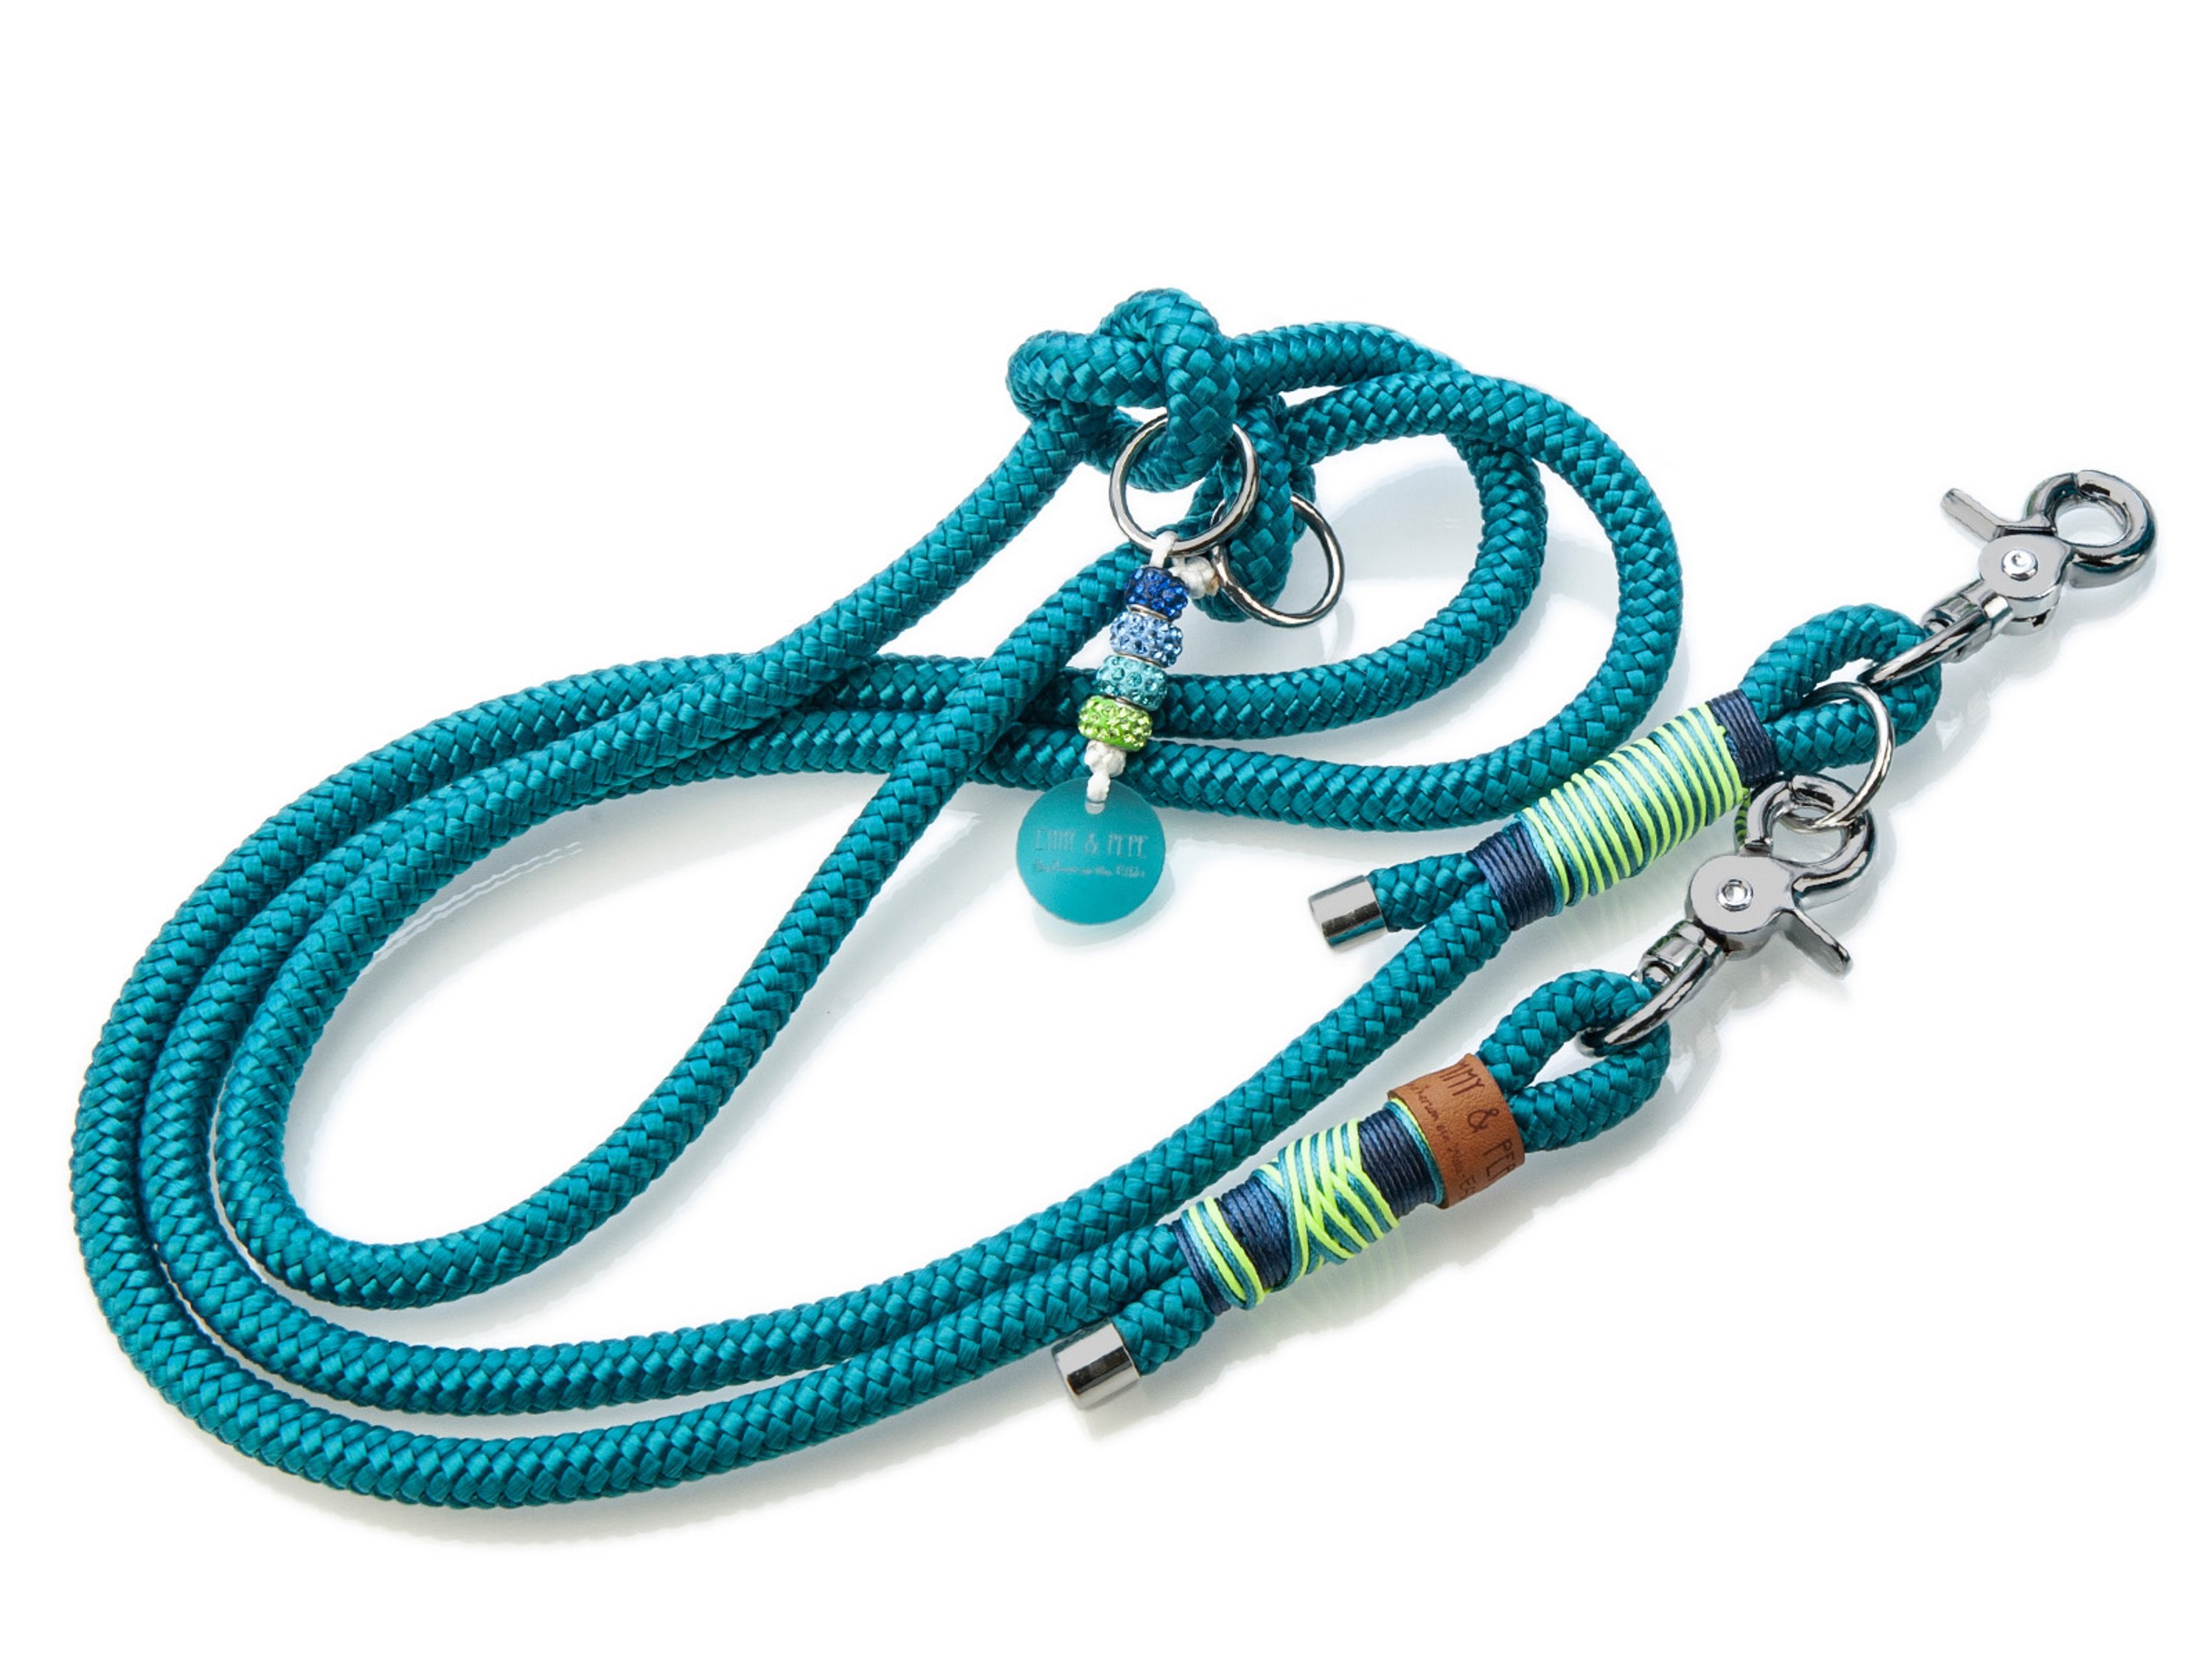 Maui XS rope leash